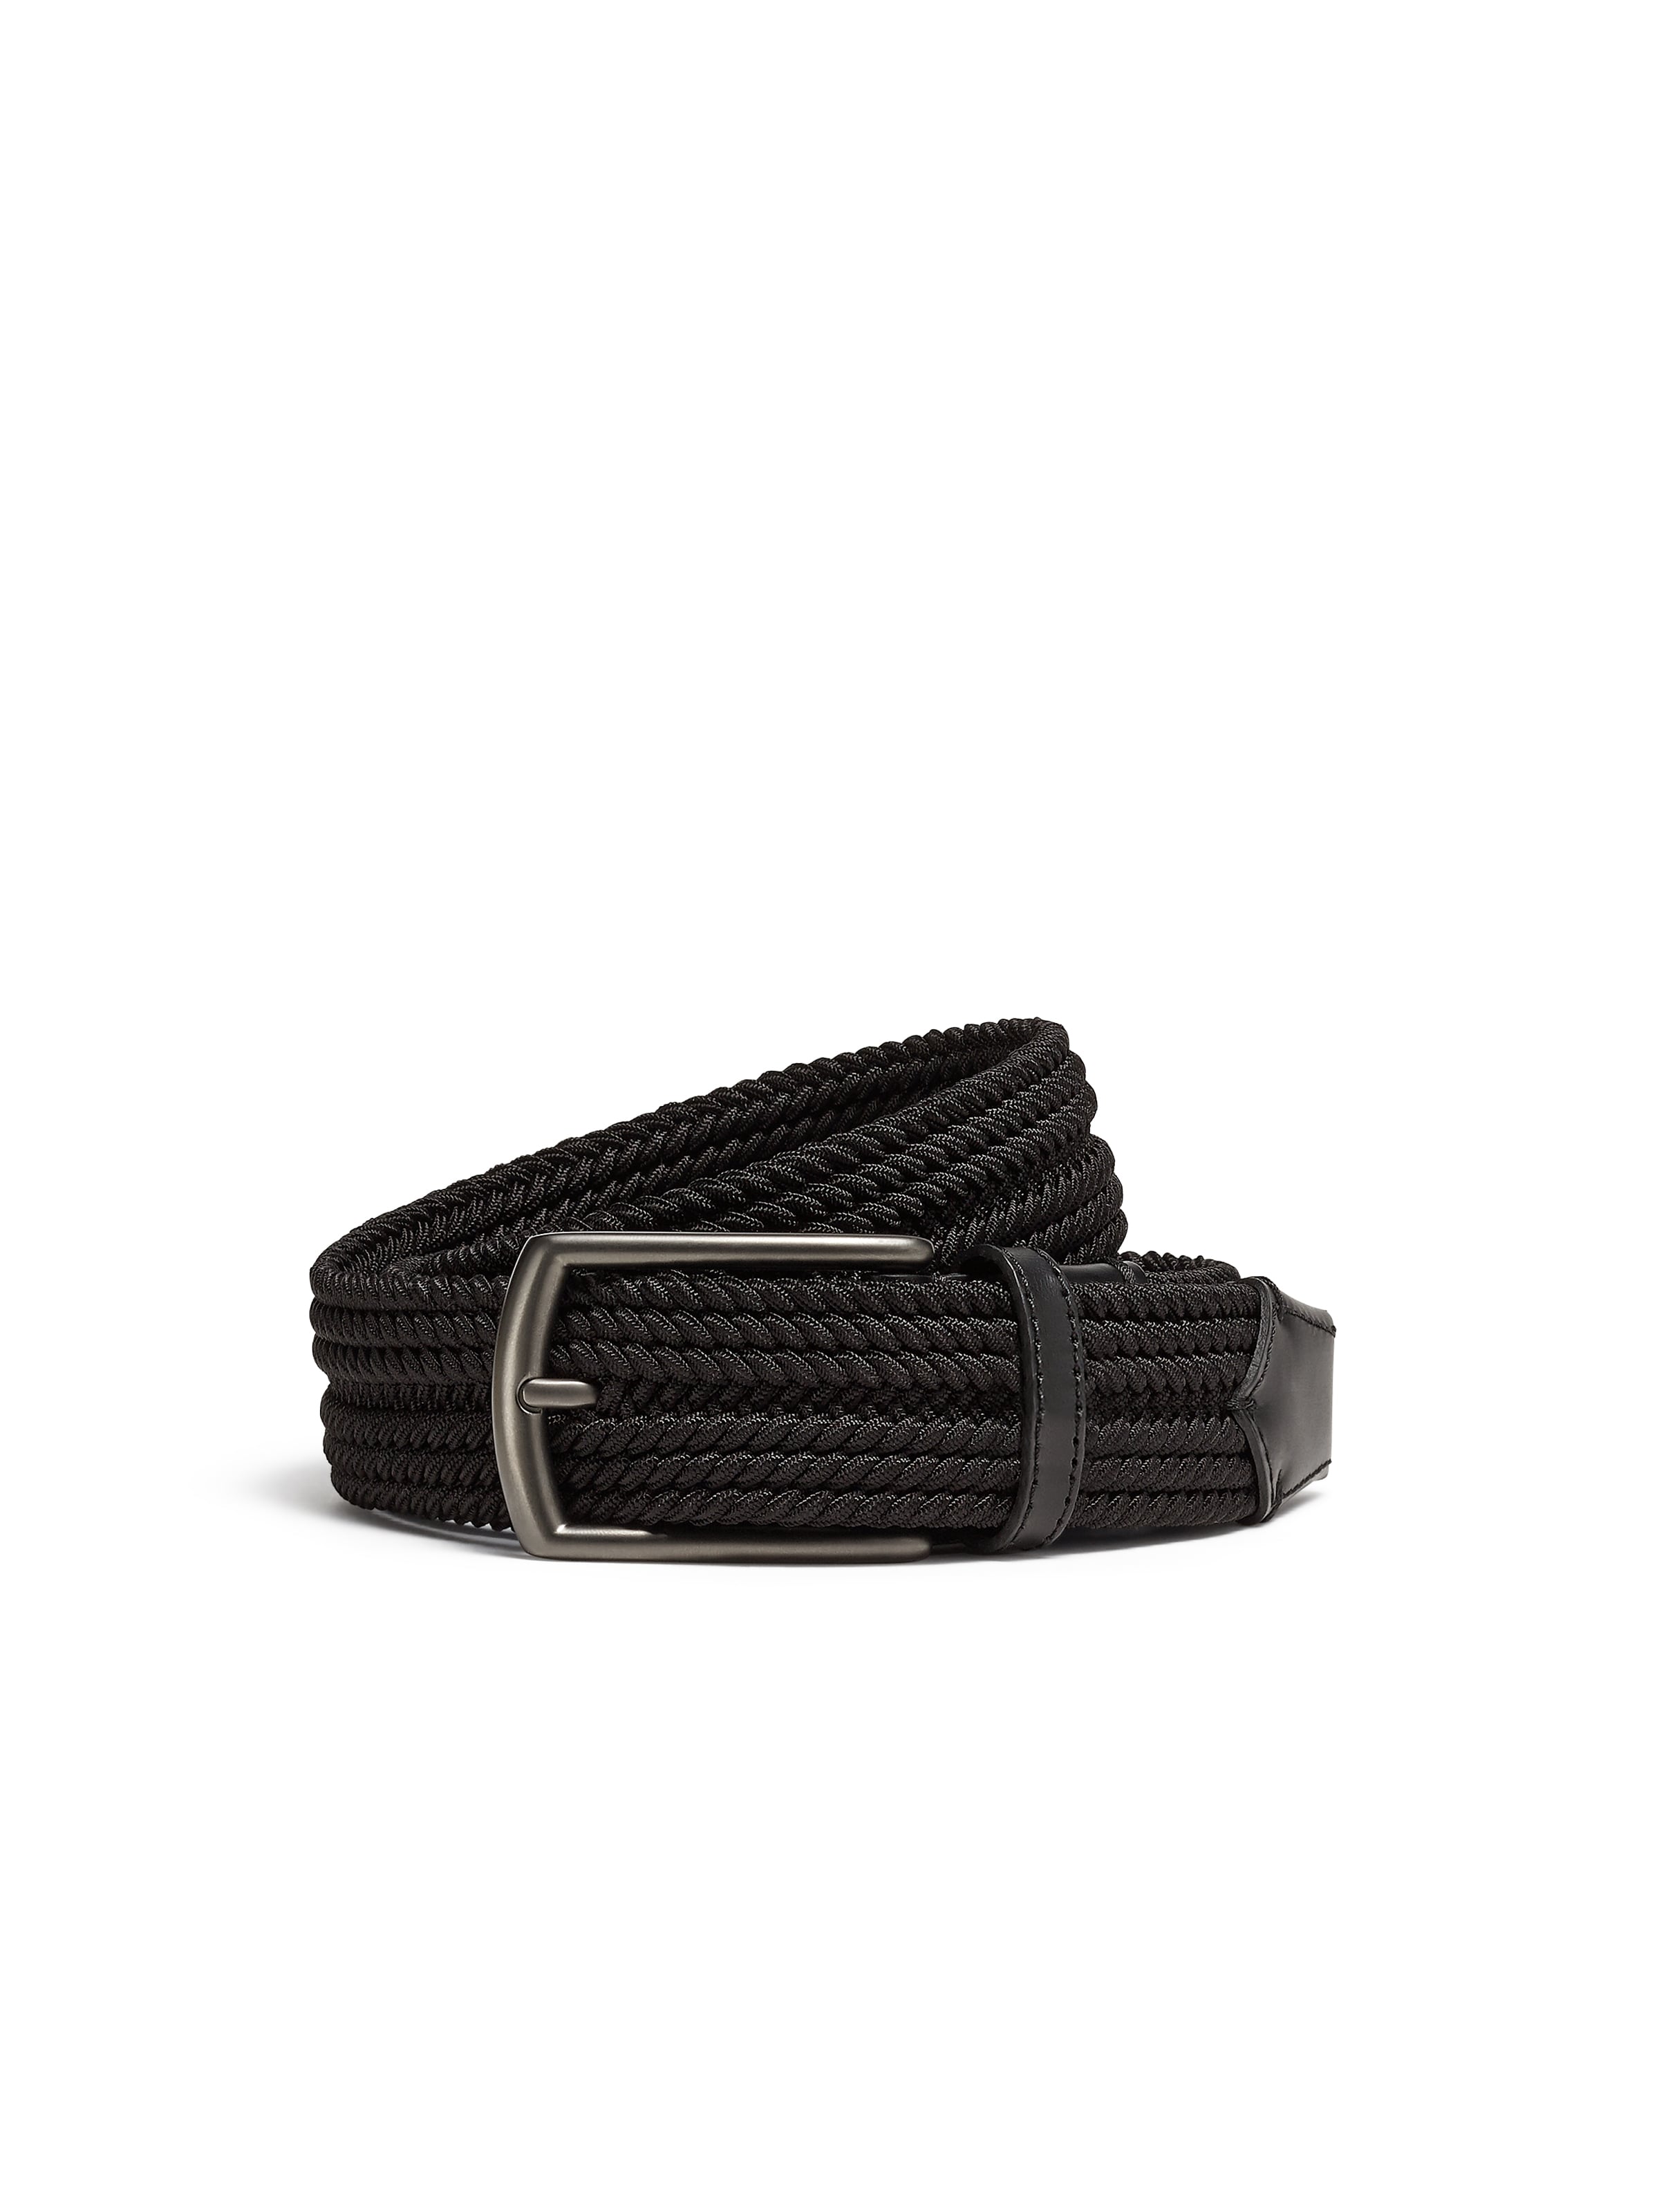 Zegna Black Elastic Rayon Braided Belt